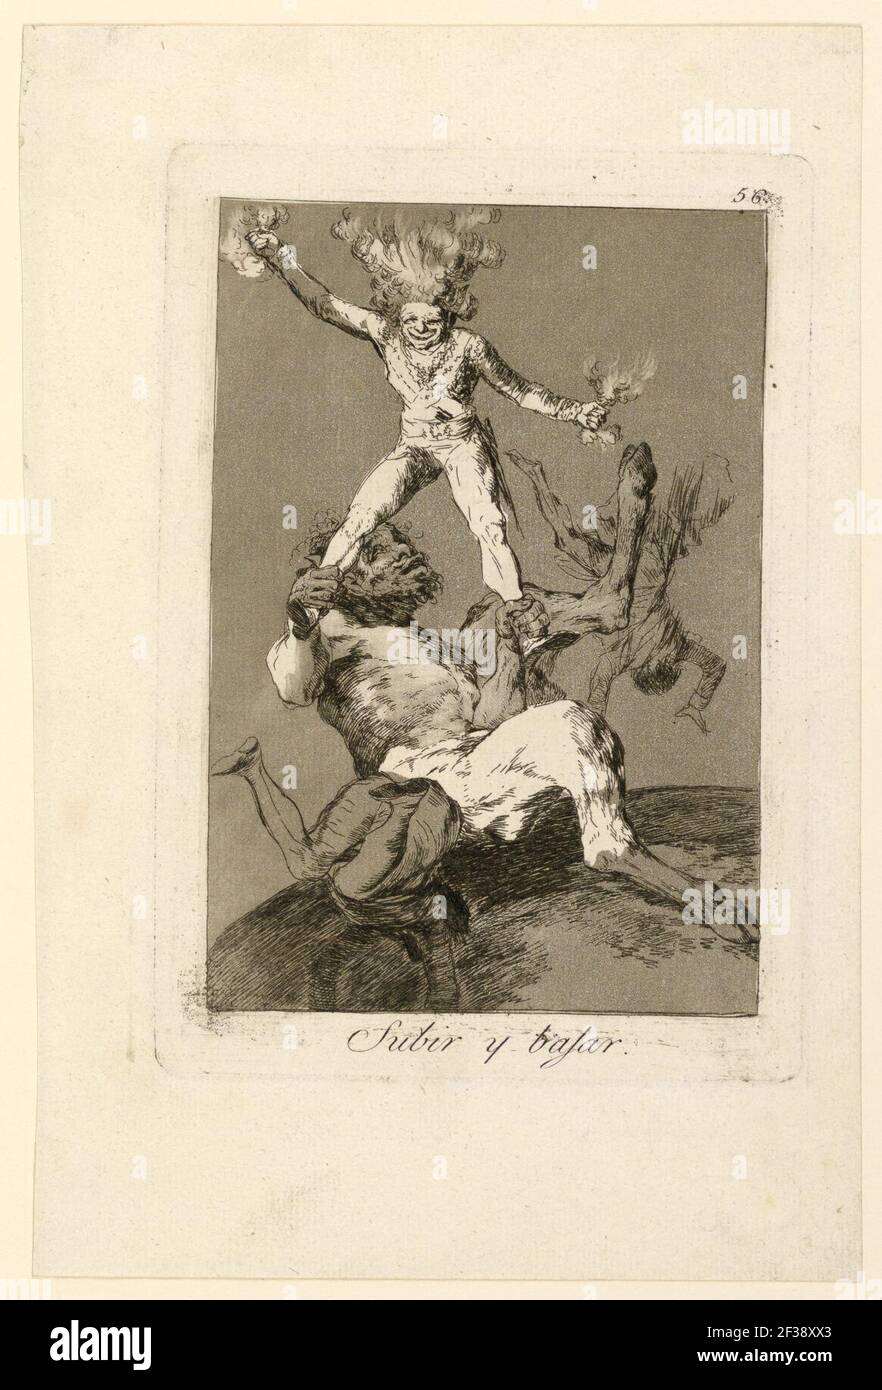 Print, Subir y Bajar (Up and Down), 1803 Stock Photo